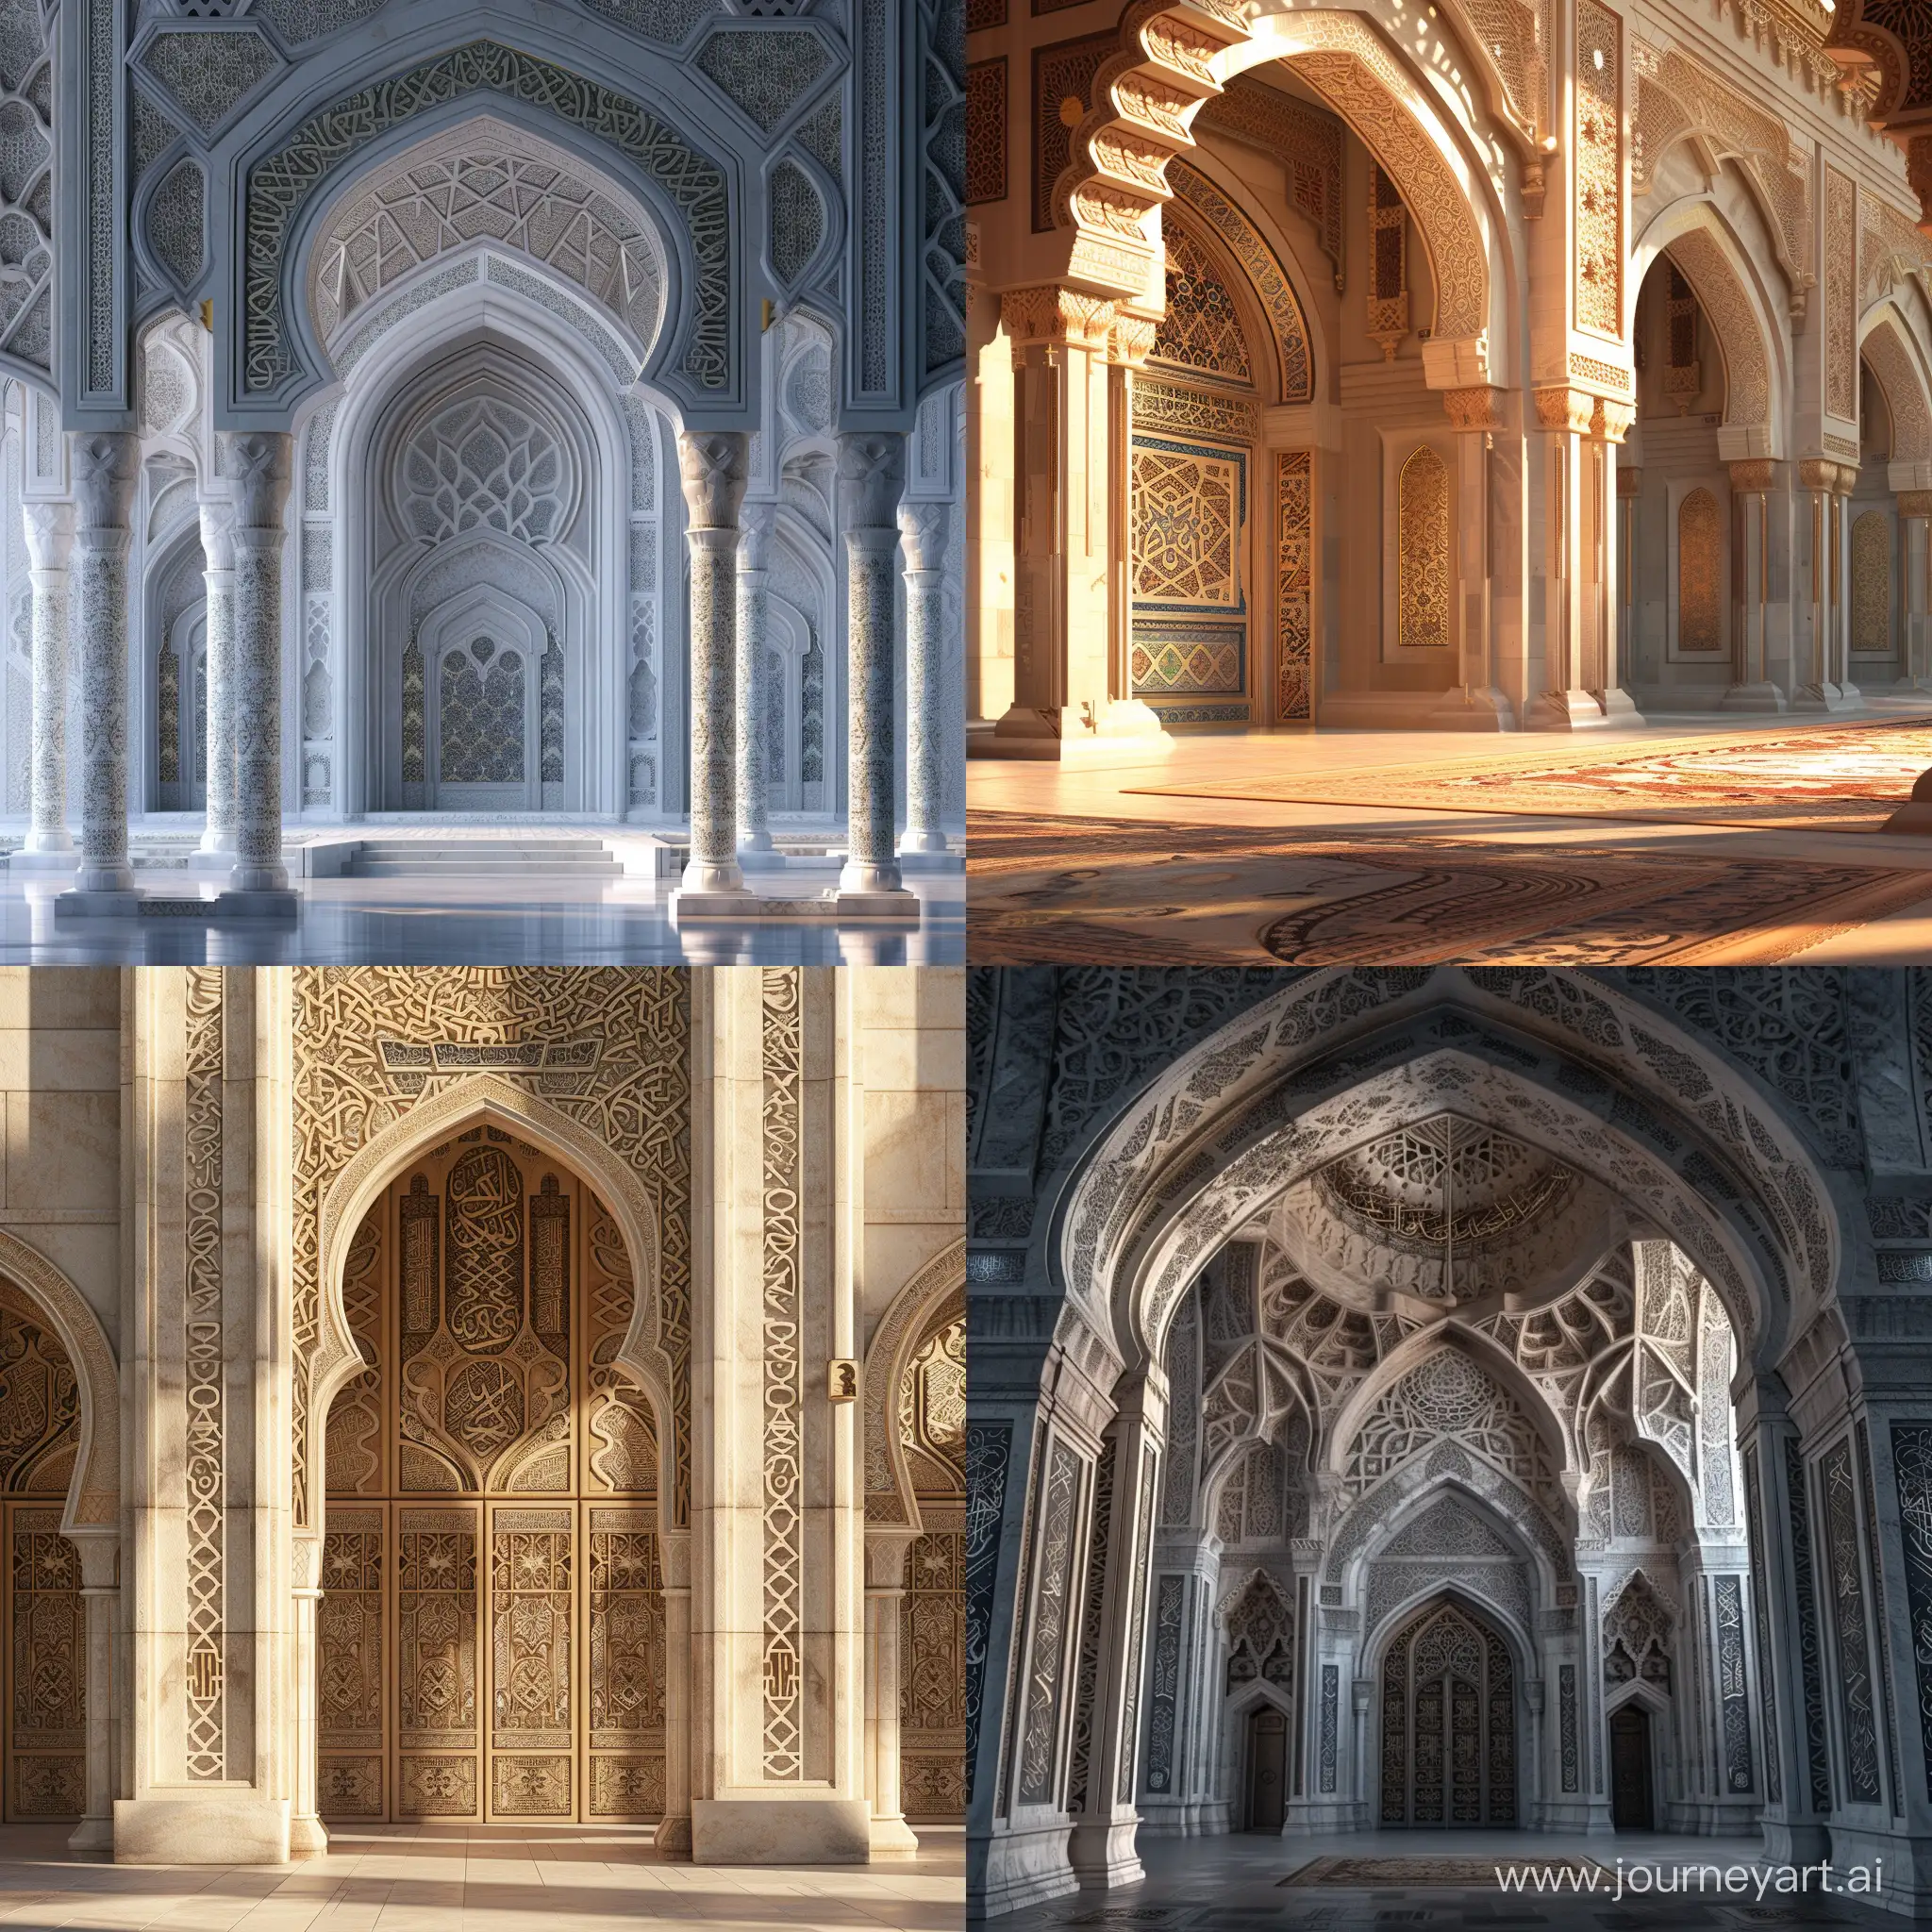 Exquisite-Mosque-Architecture-Serene-Grandeur-in-Intricate-Details